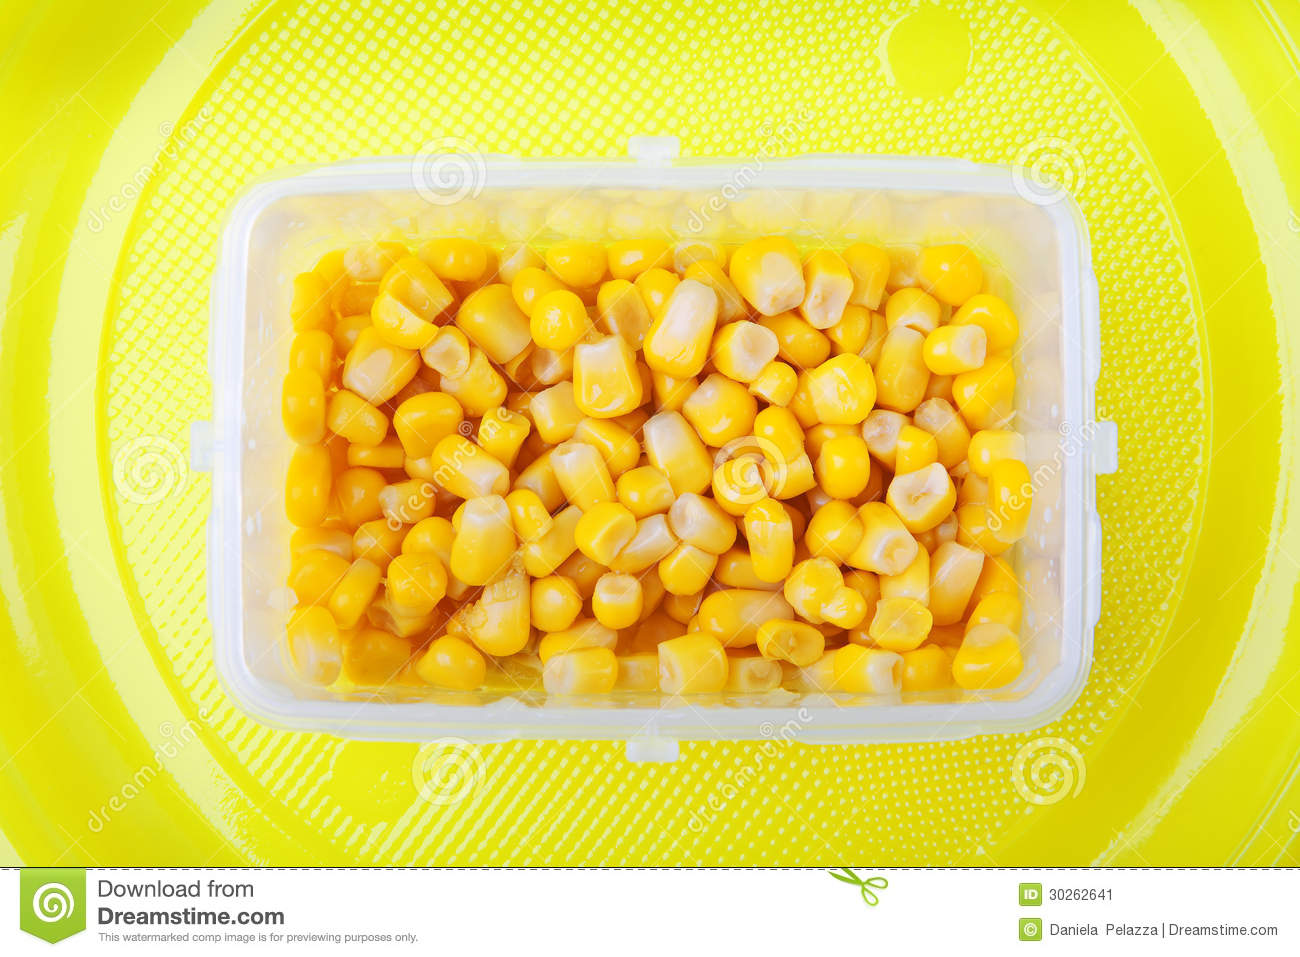 Kernel Corn Stock Image   Image  30262641